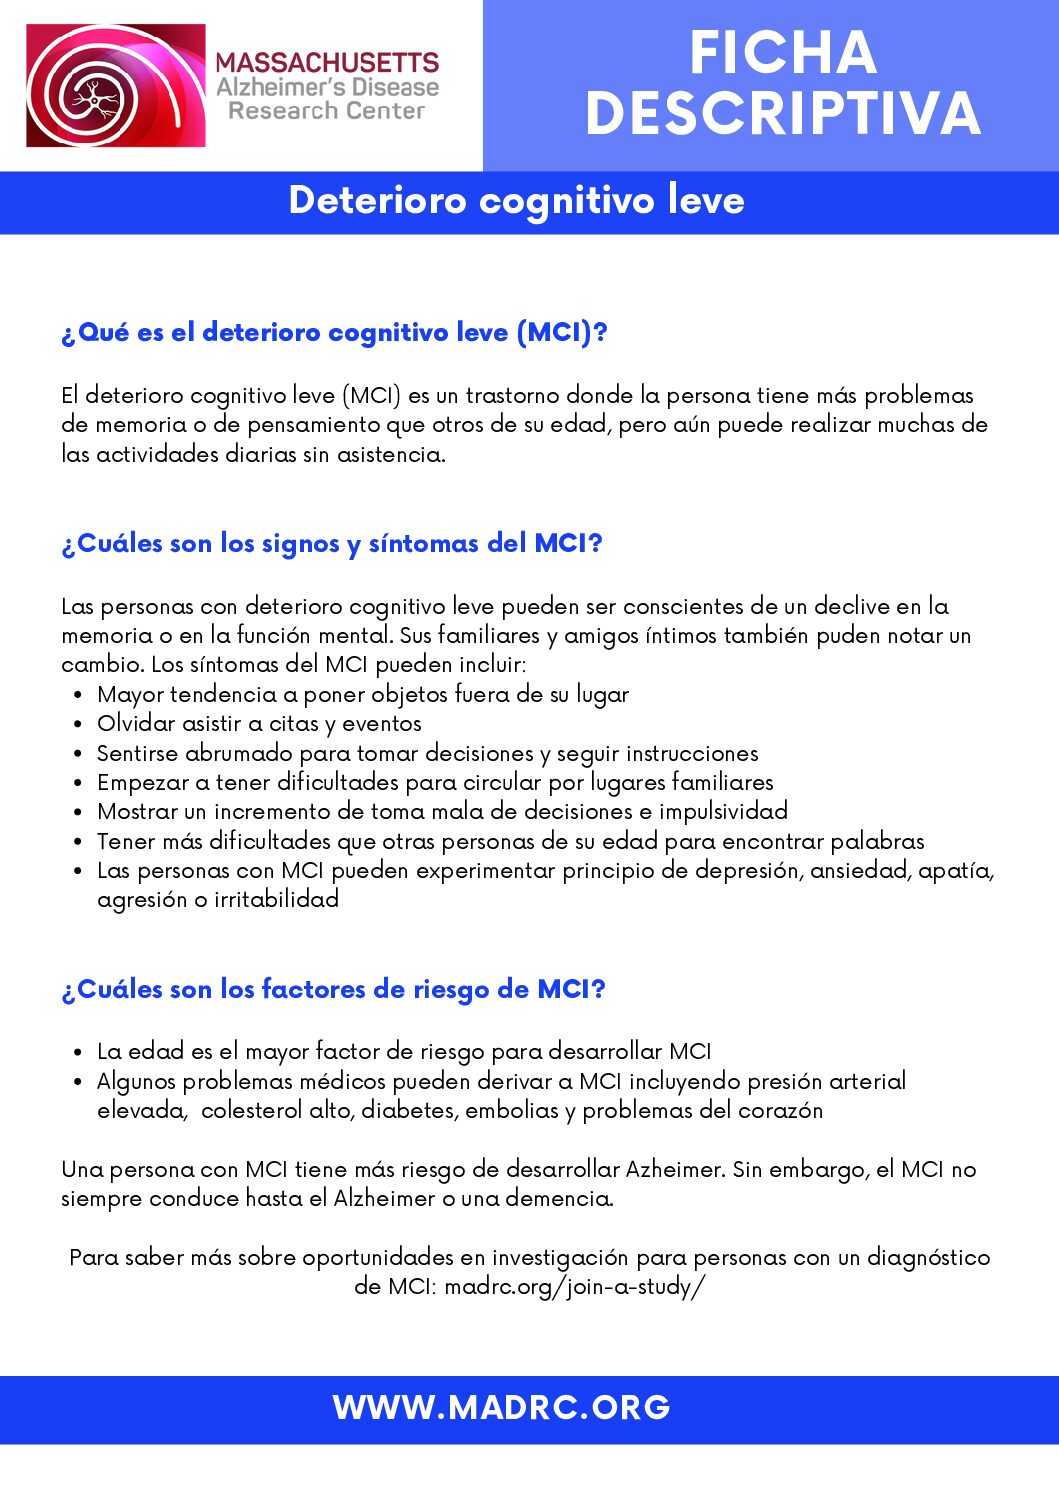 Mild cognitive impairment sheet - Spanish